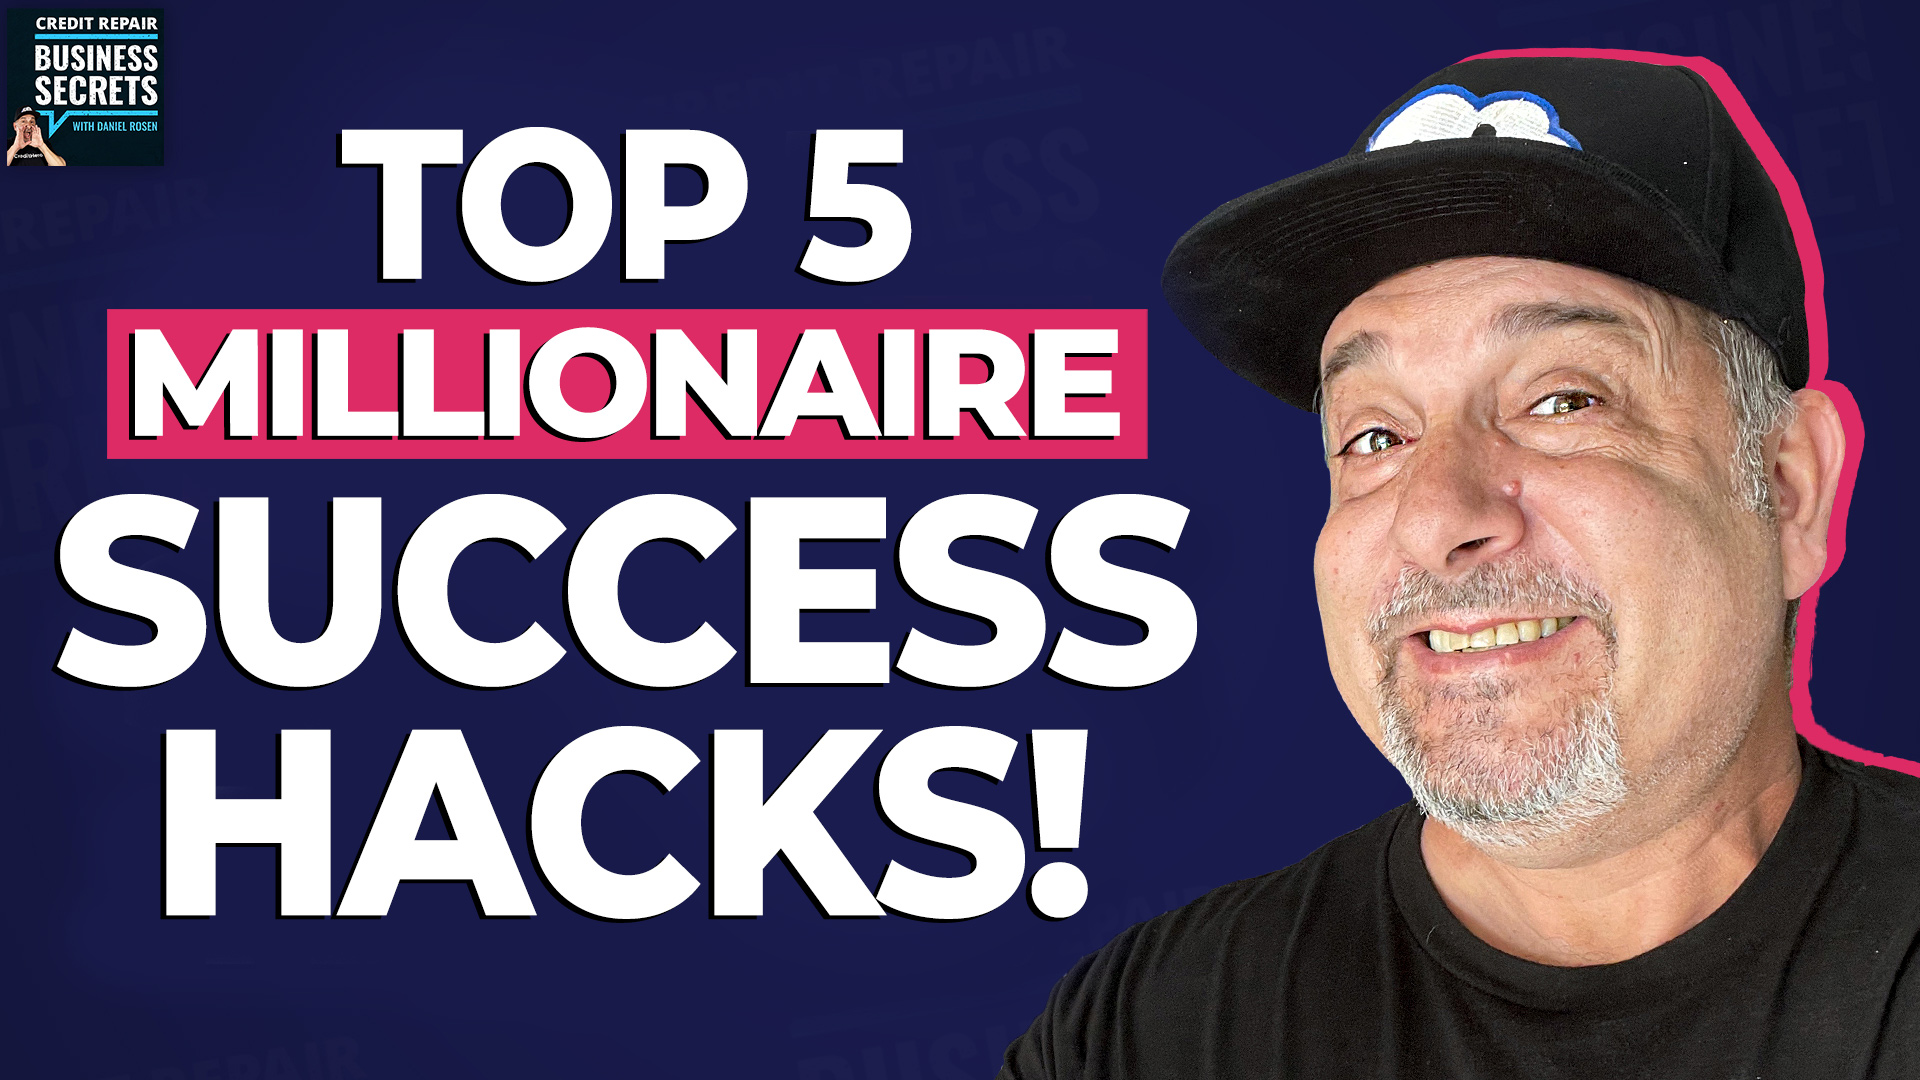 Top 5 Millionaire Hacks